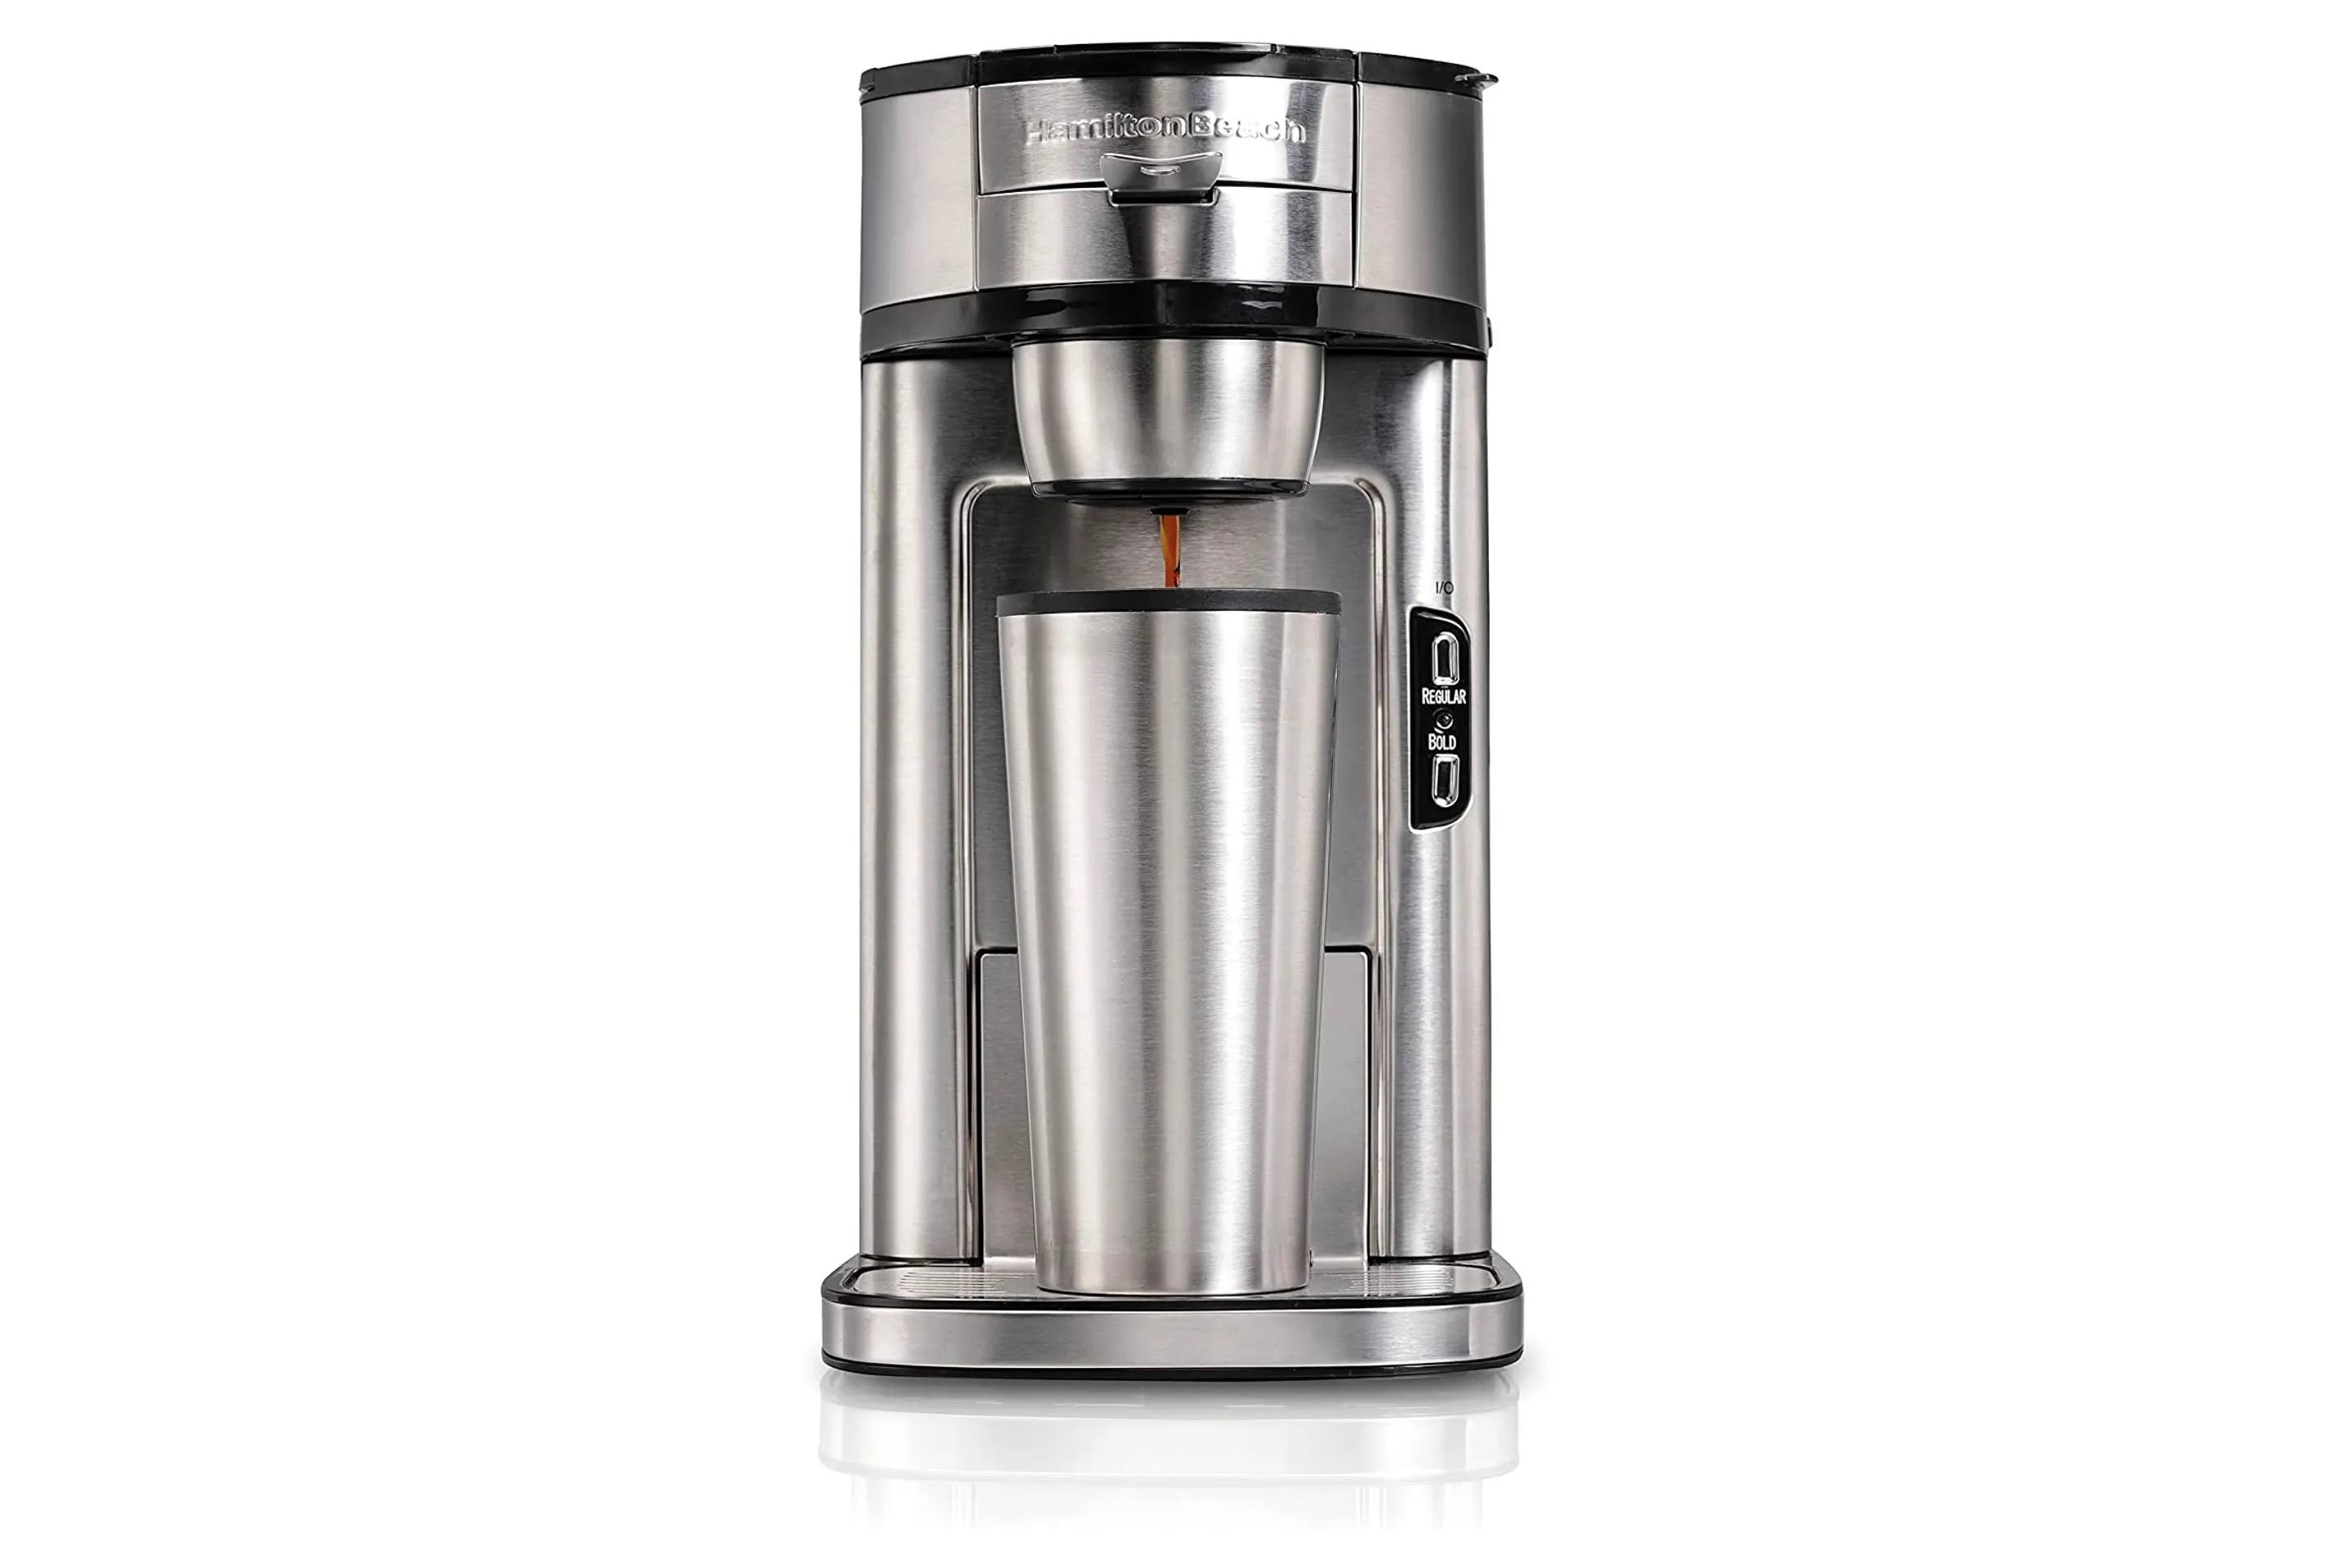 LUXHAUS Stovetop Espresso Maker -3 Cup Moka Pot Coffee Maker 100